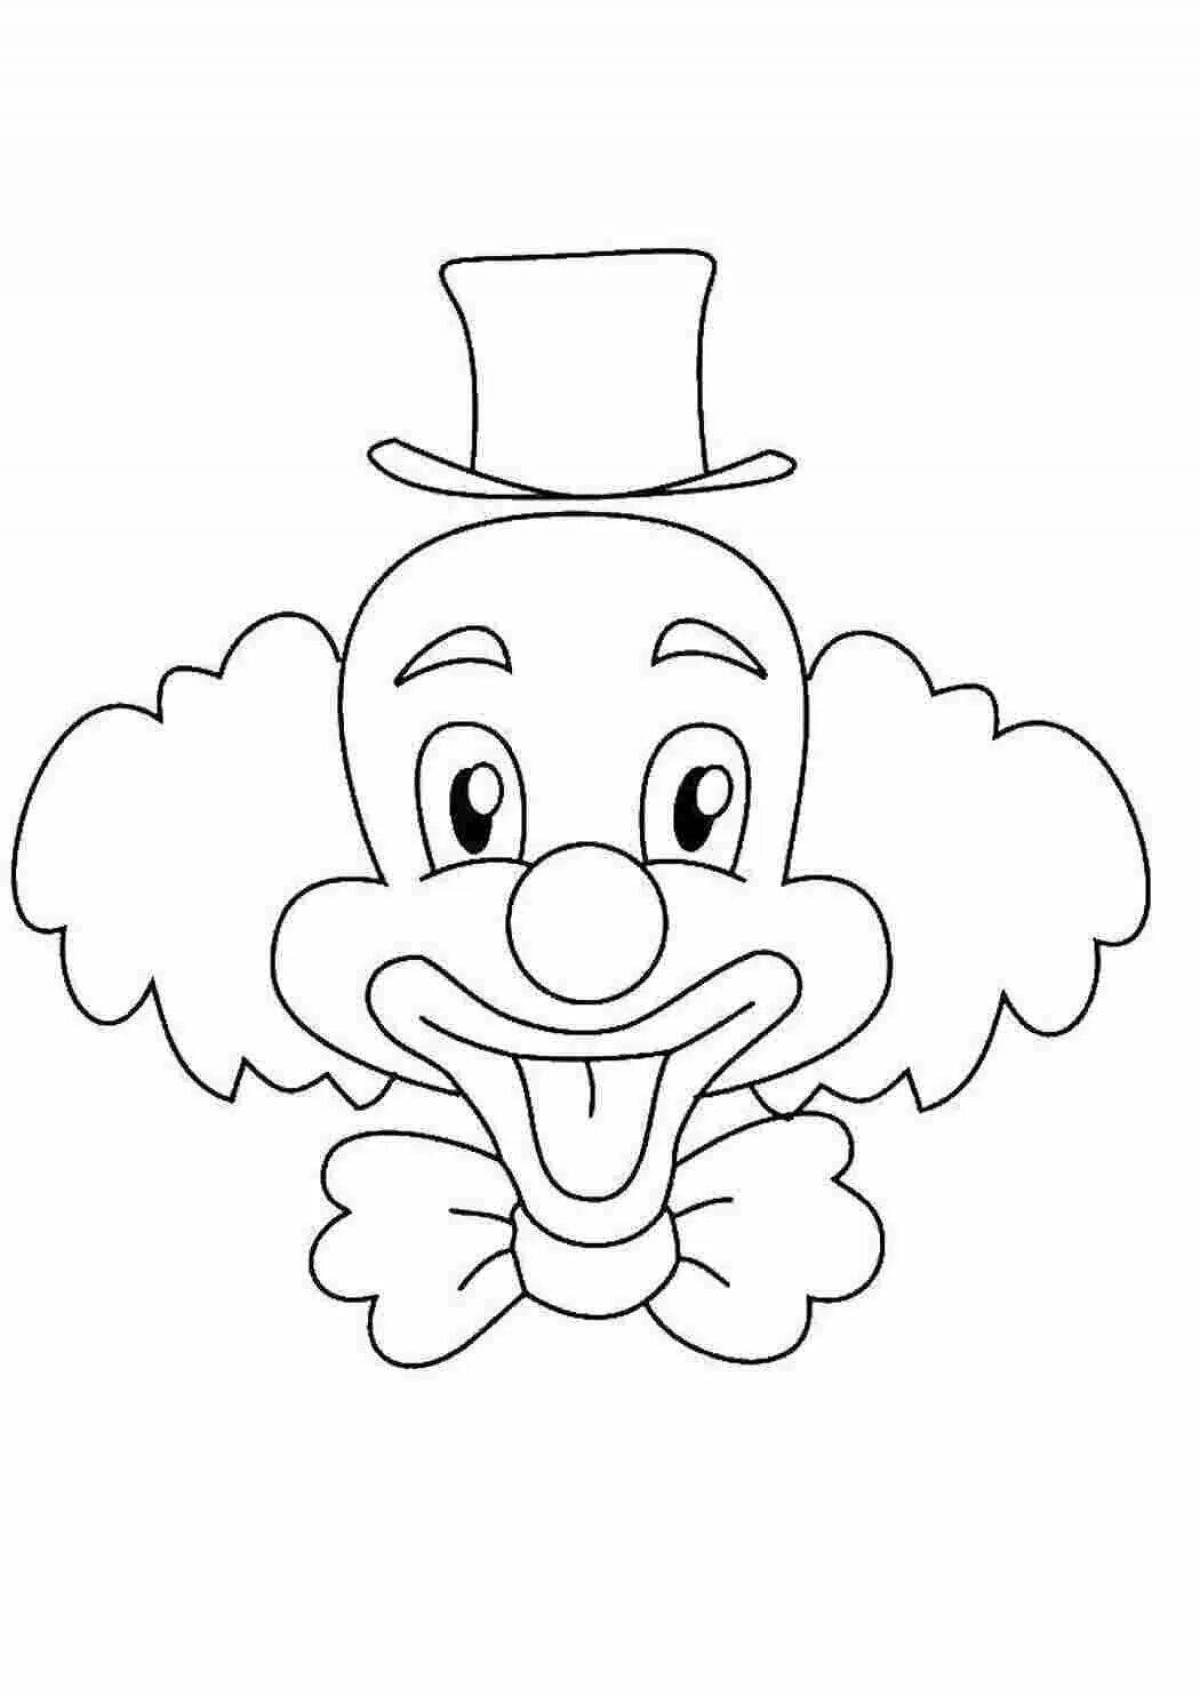 Fun clown drawing for kids